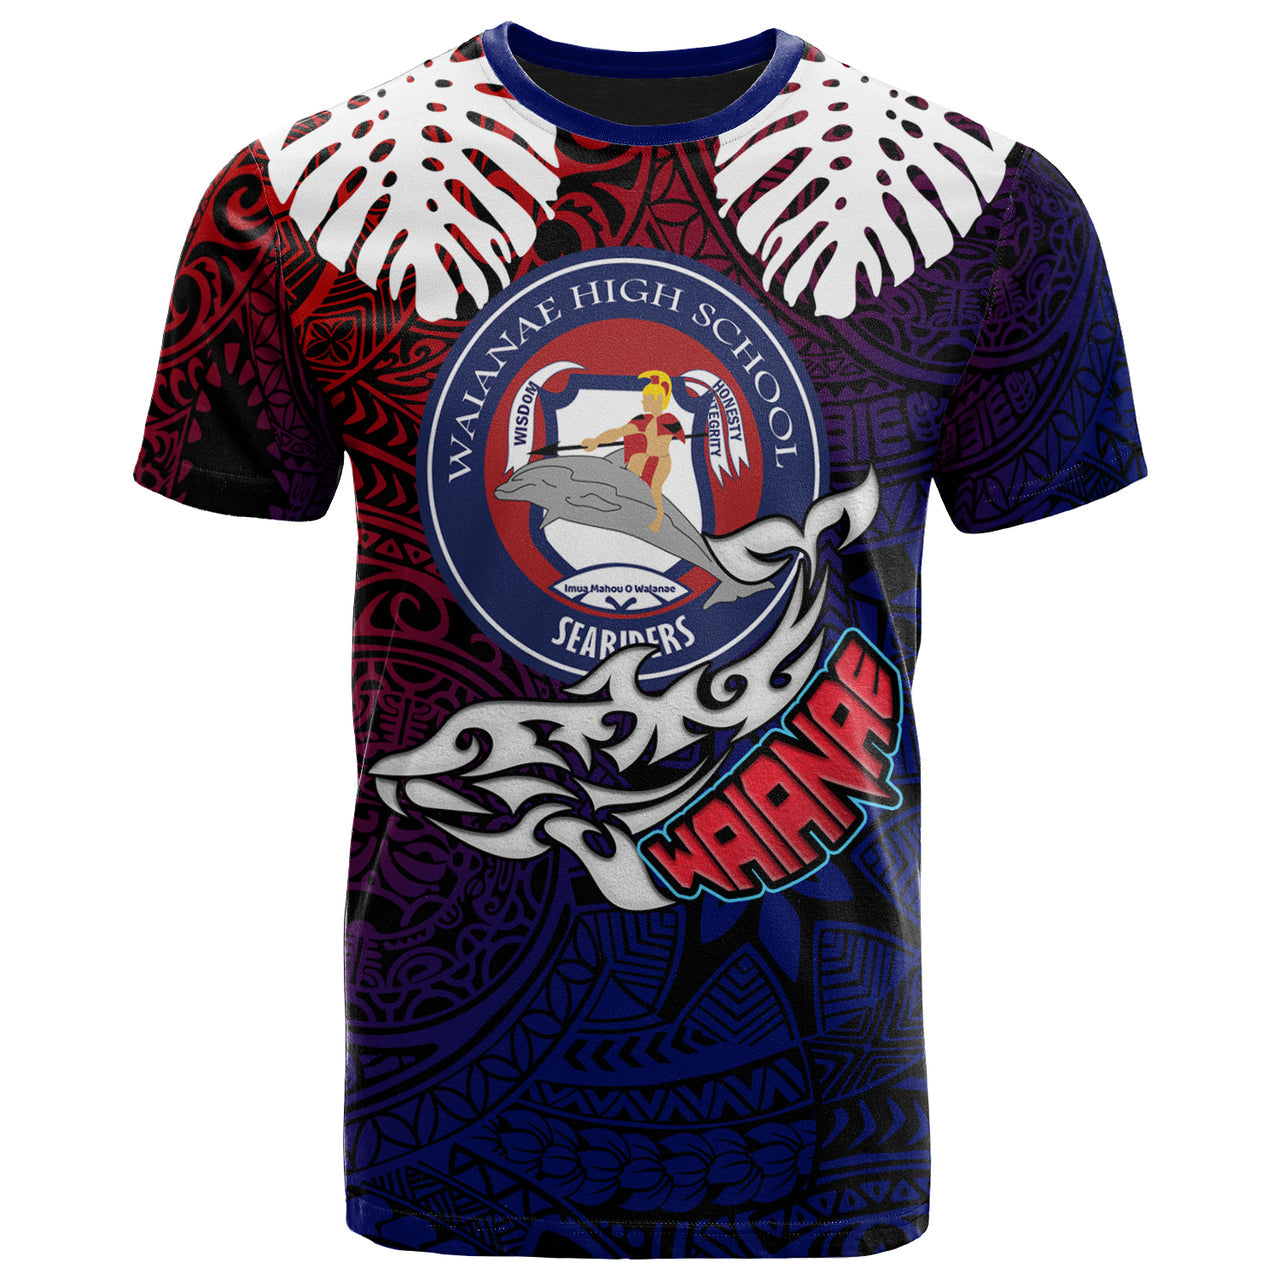 hawaii-waianae-high-school-custom-t-shirt-waianae-high-school-polynesian-pattern